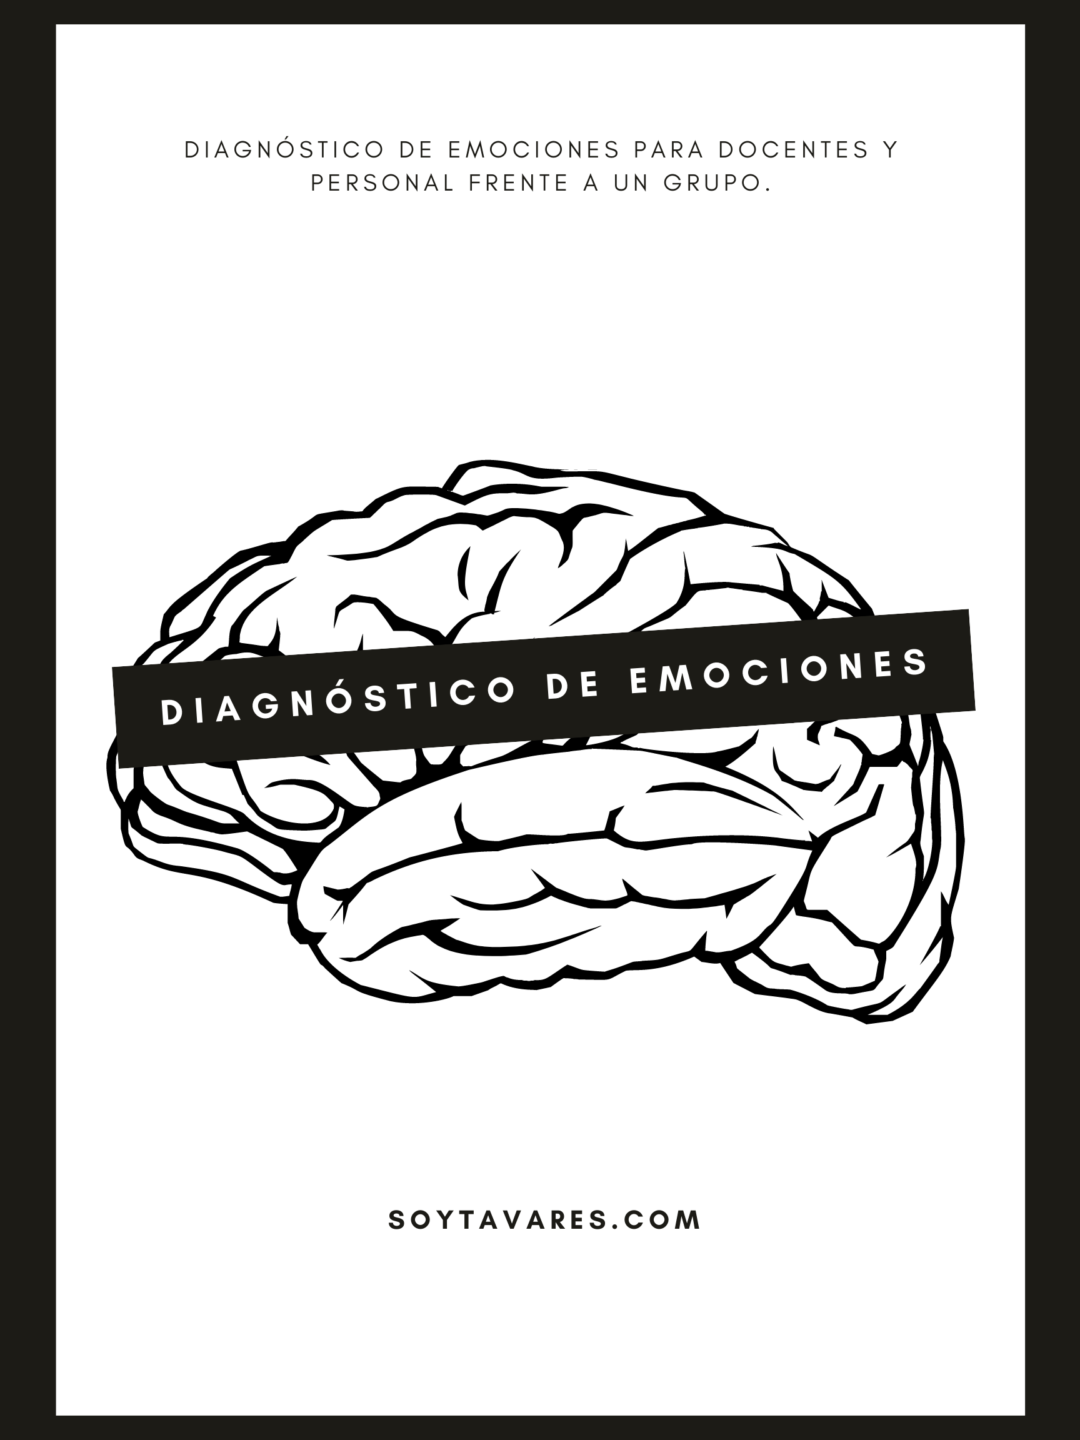 Diagnóstico emocional